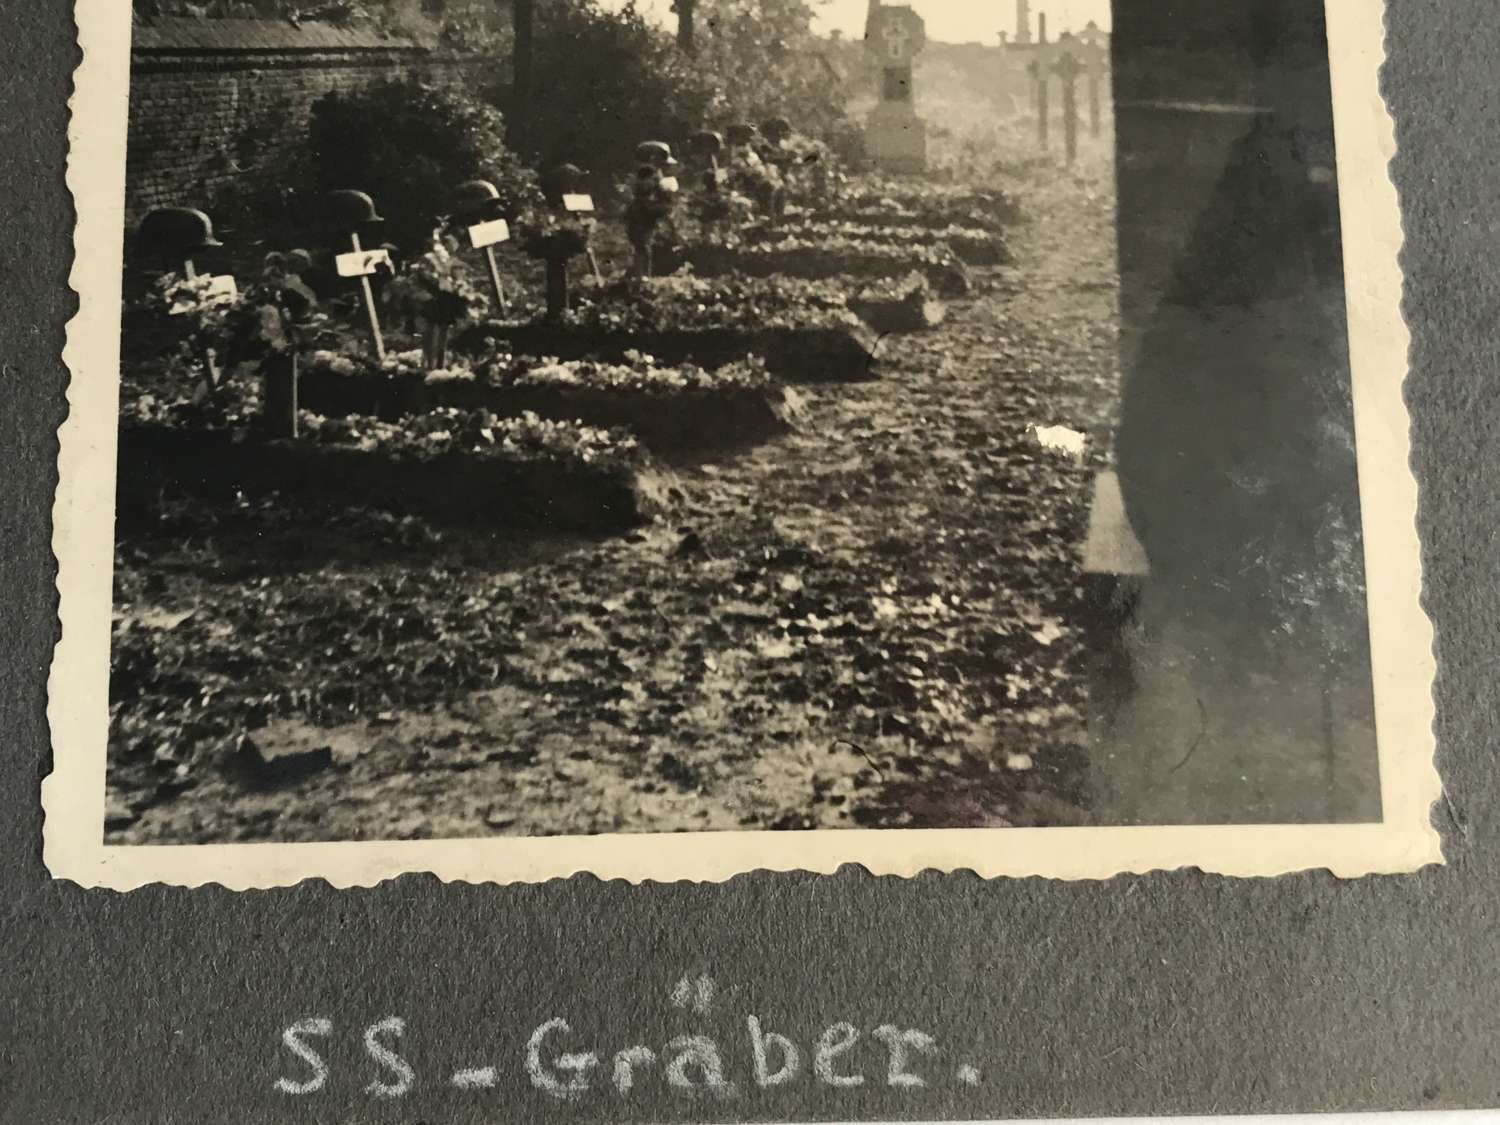 SS cemetery photograph